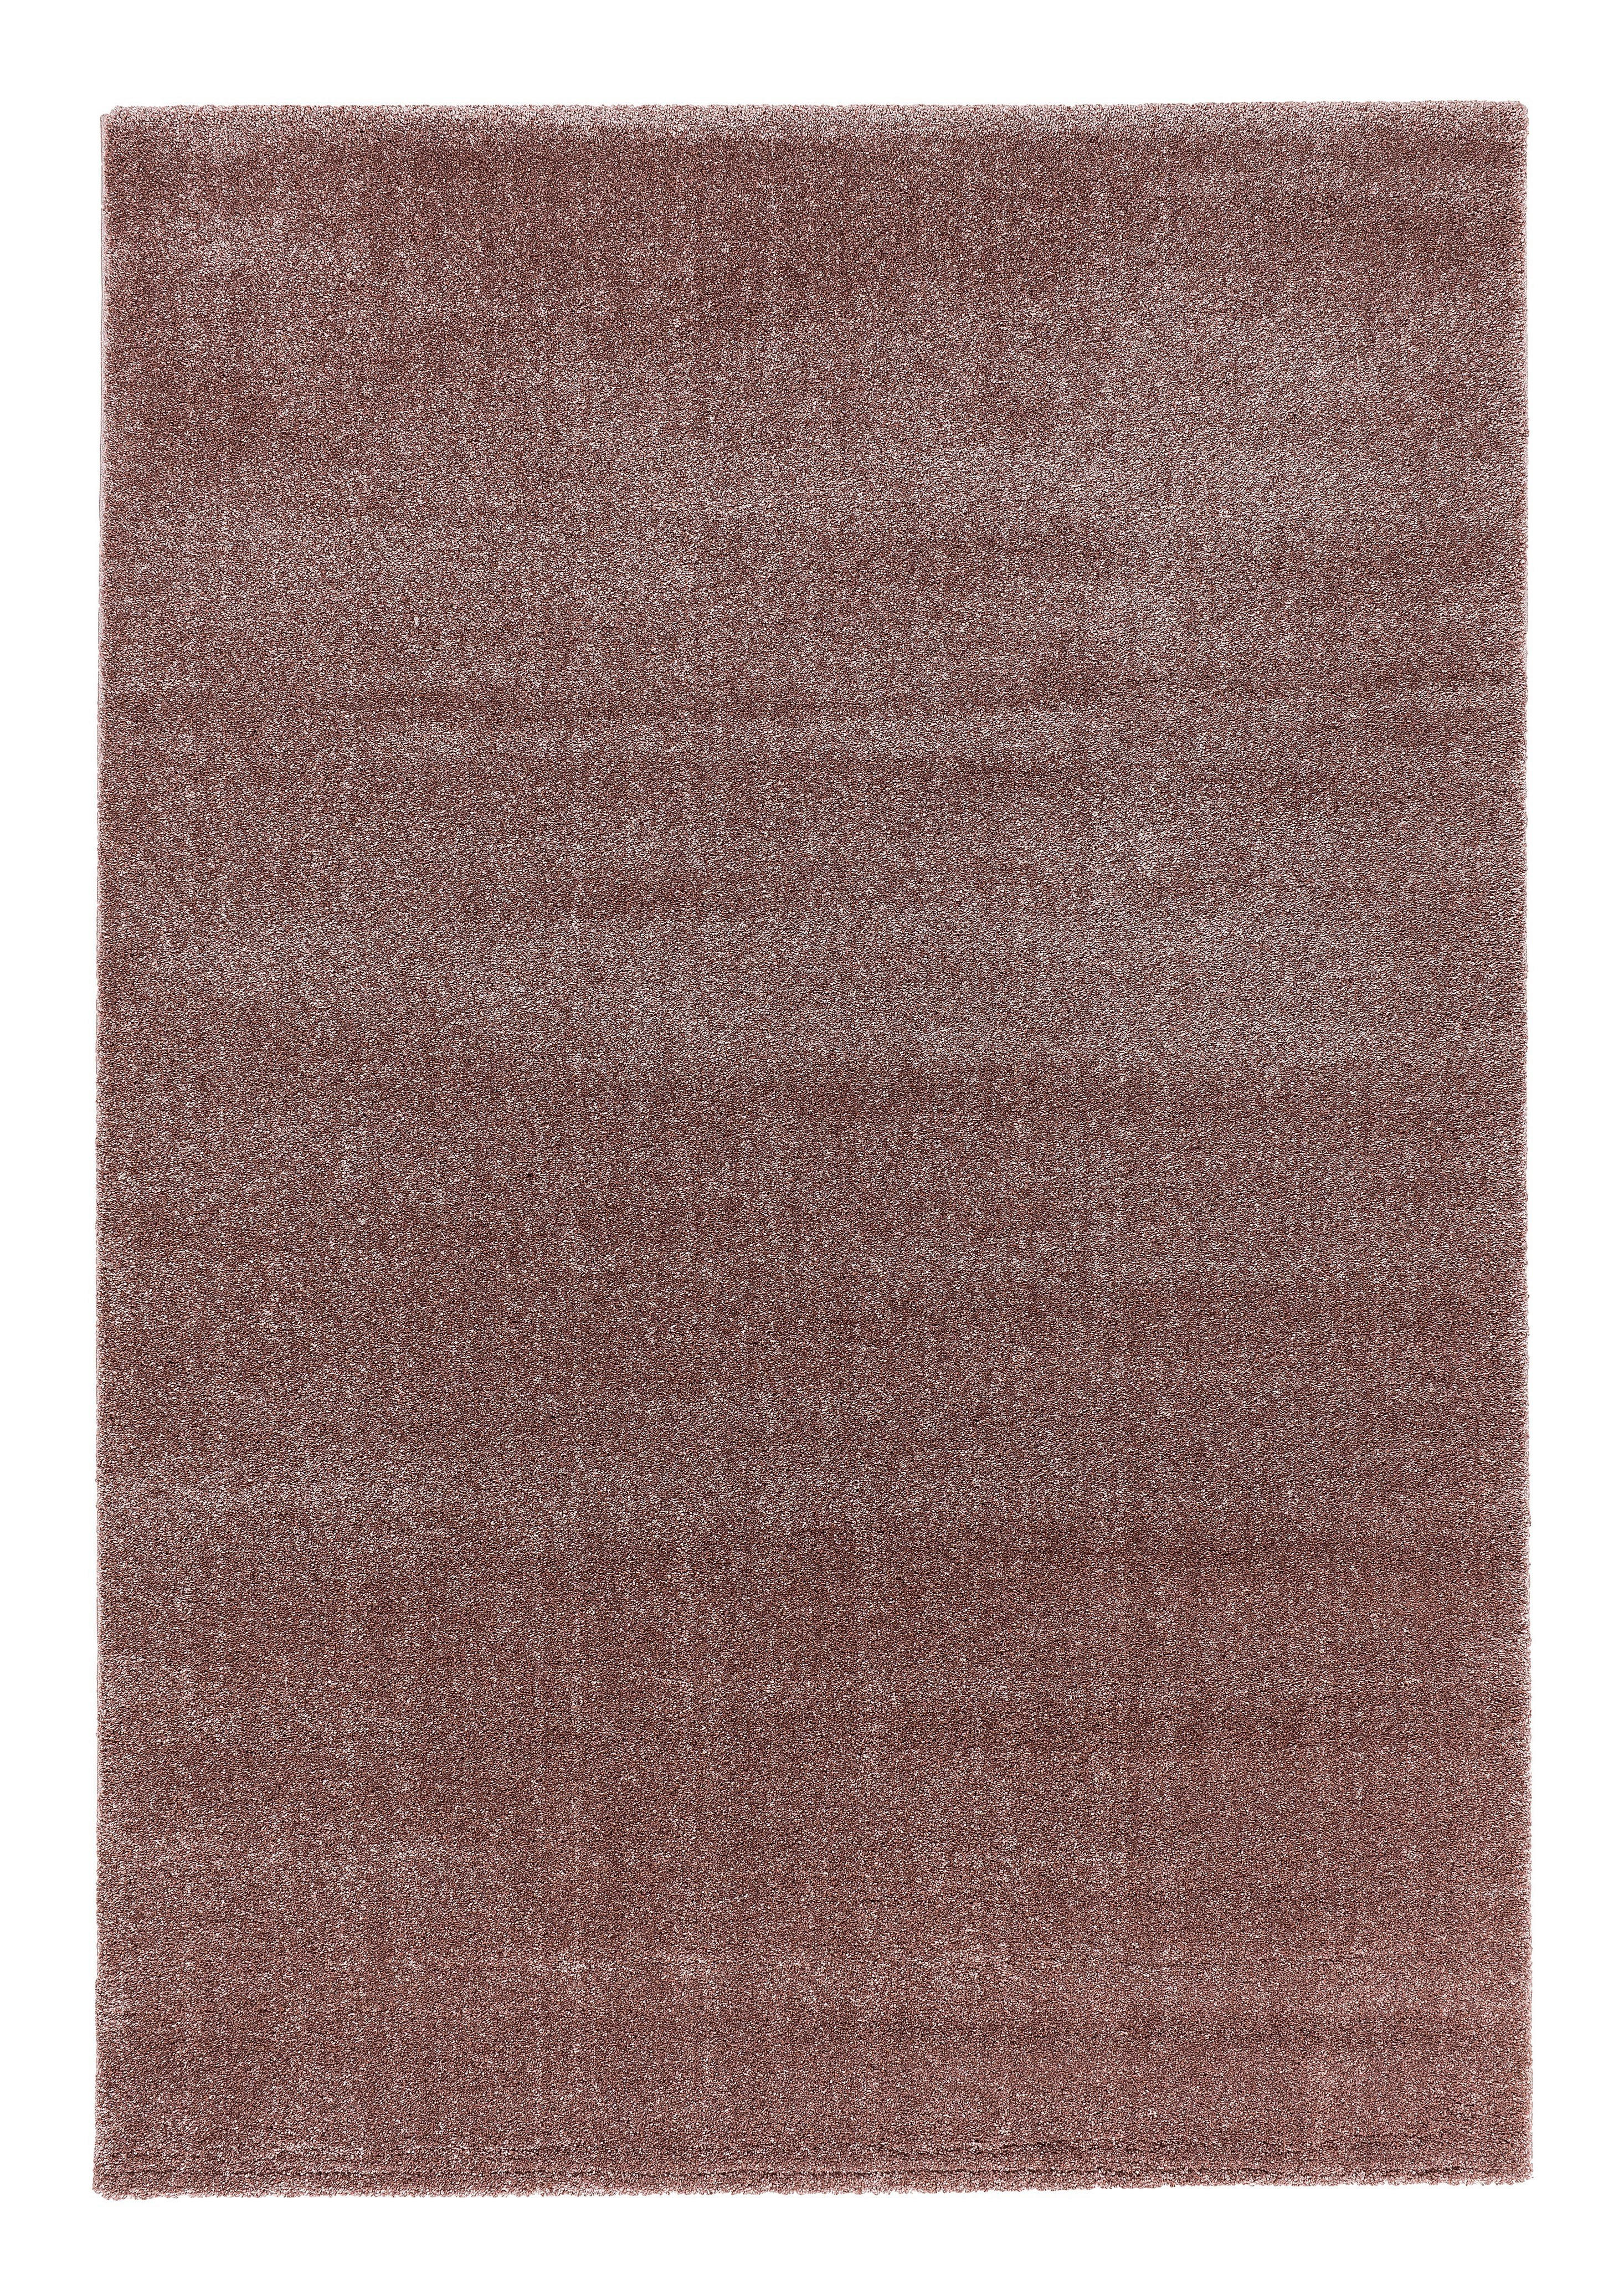 WEBTEPPICH 80/150 cm  - Aubergine, Basics, Textil (80/150cm) - Novel